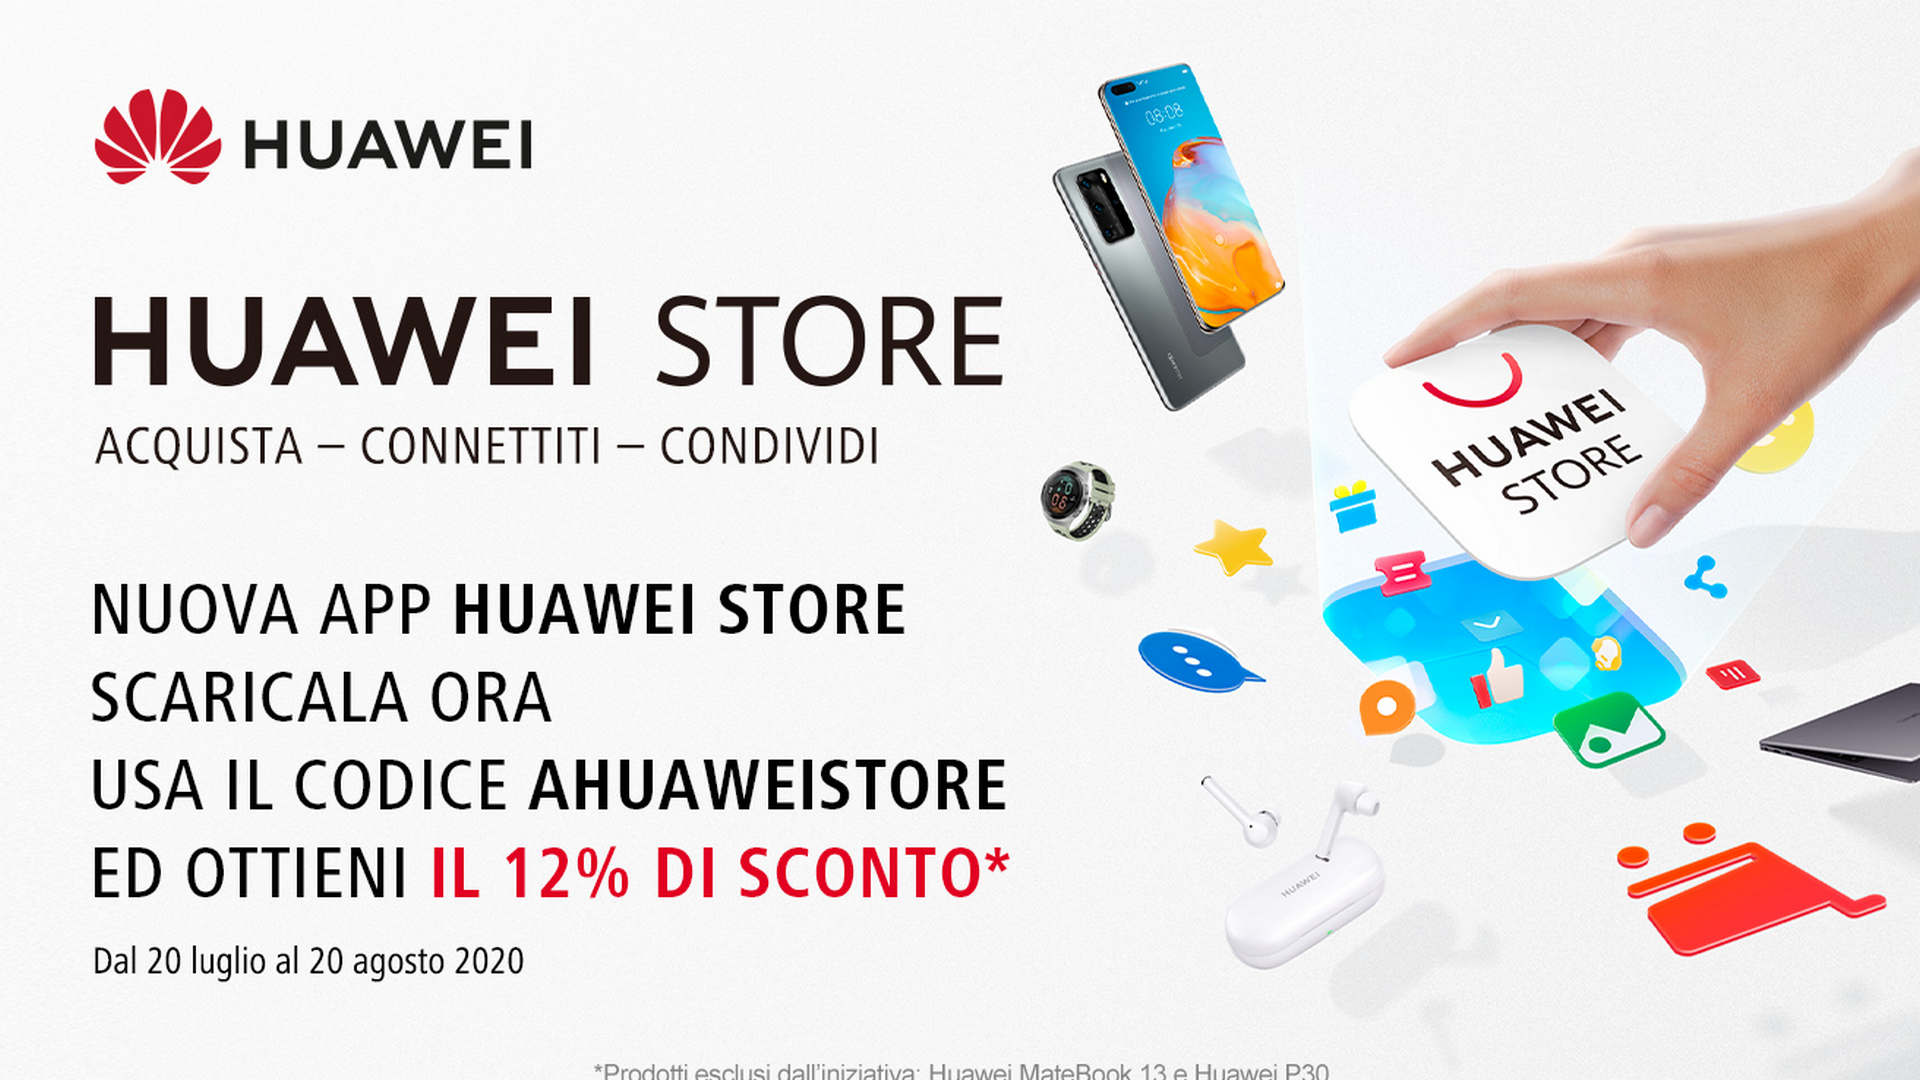 Магазин Приложений Huawei App